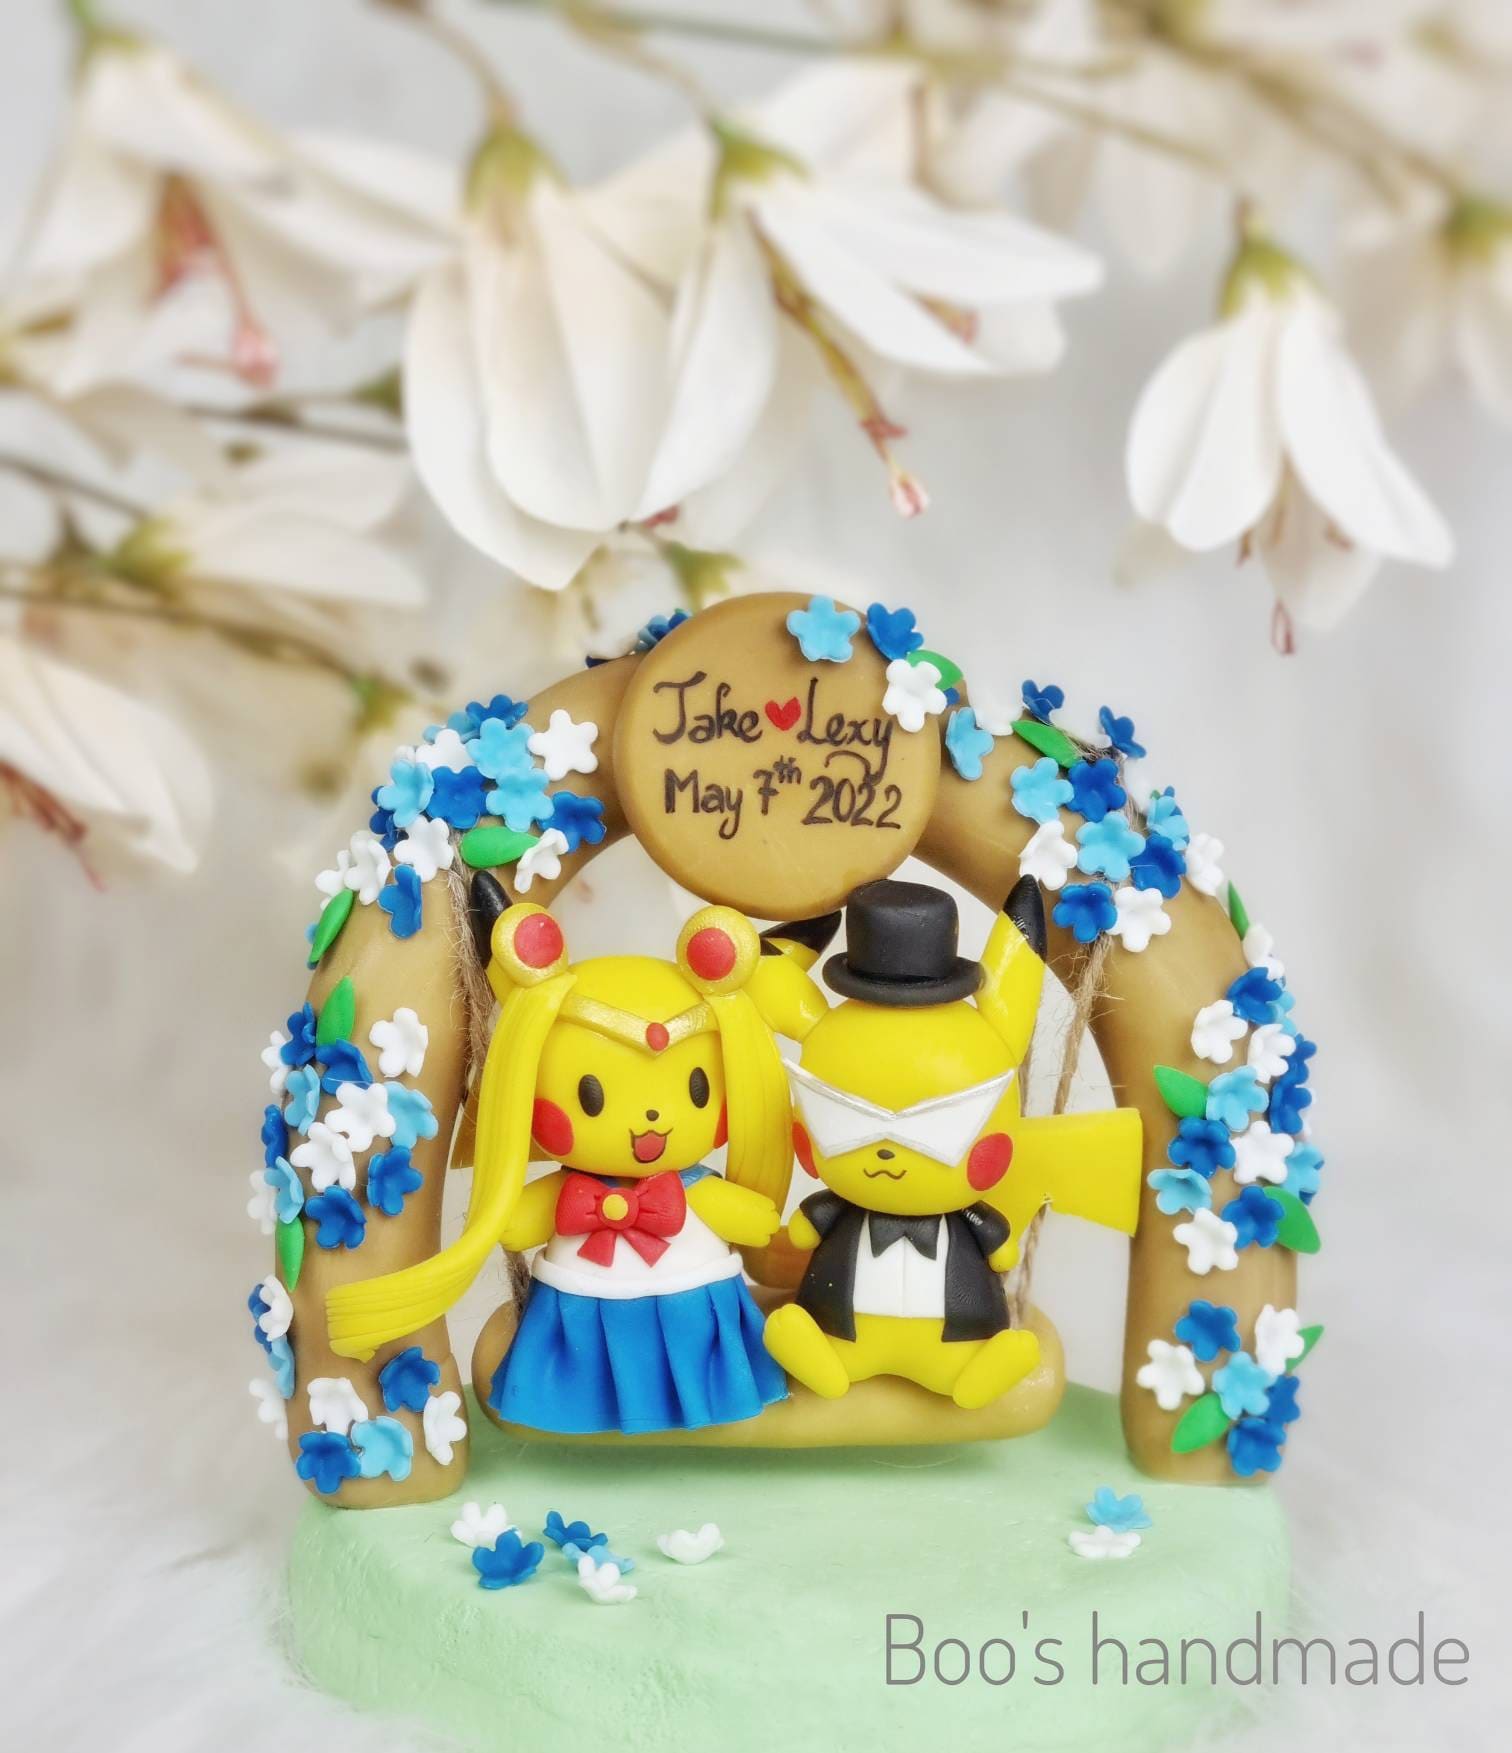 Clay Pikachu Art Kit — Art Party Boss